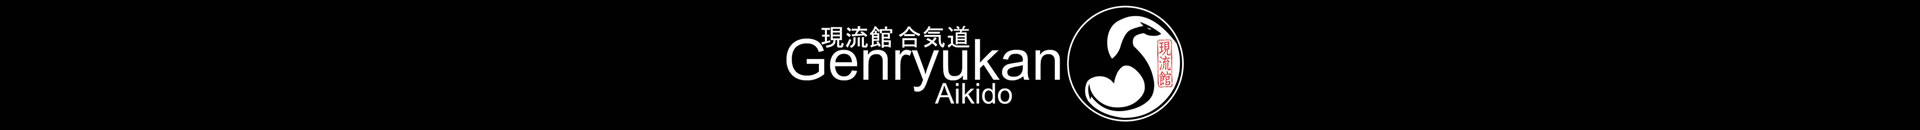 New 2017 Design Genryukan “Aiki” T-Shirt